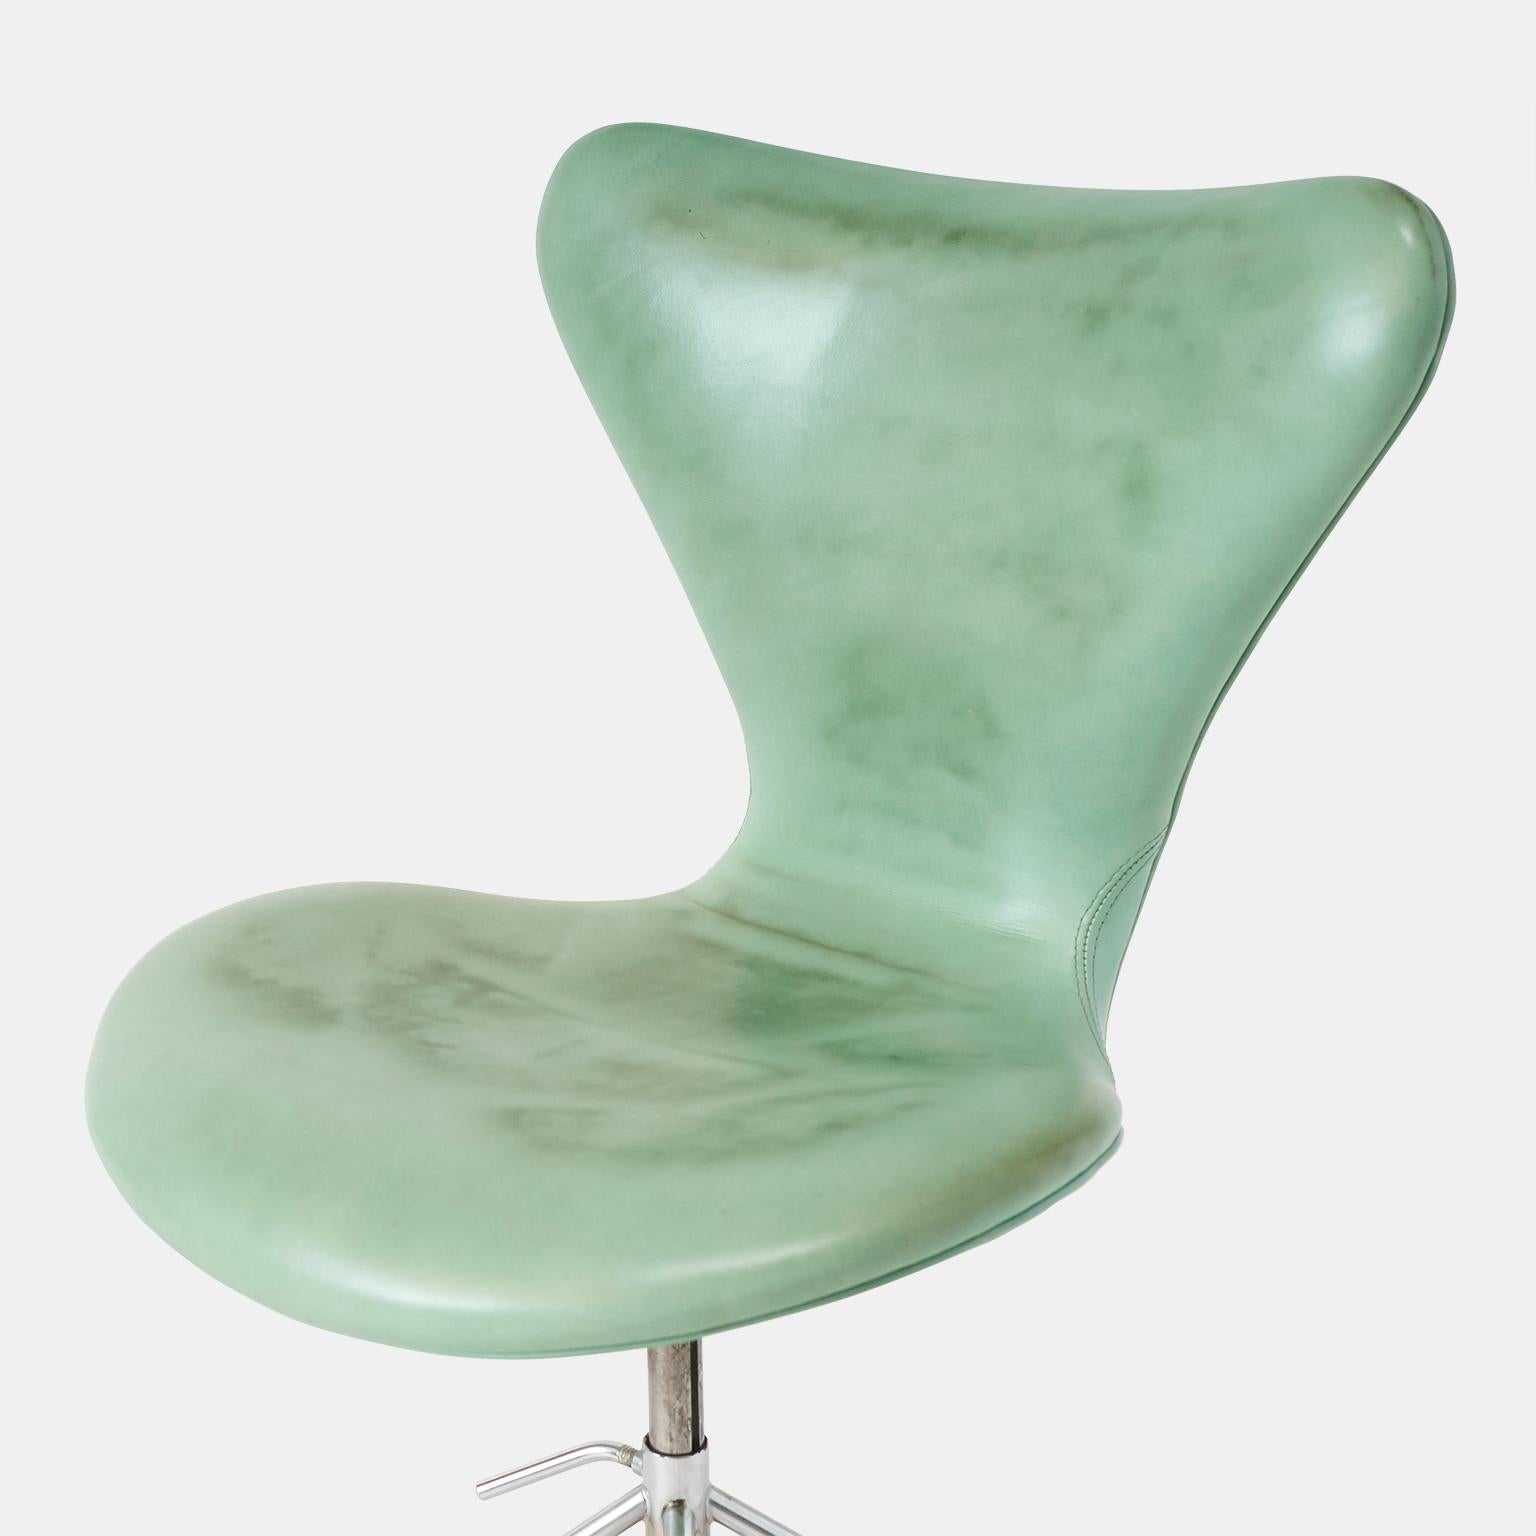 Steel A Series 7 Office Chair, Model 3117, by Arne Jacobsen